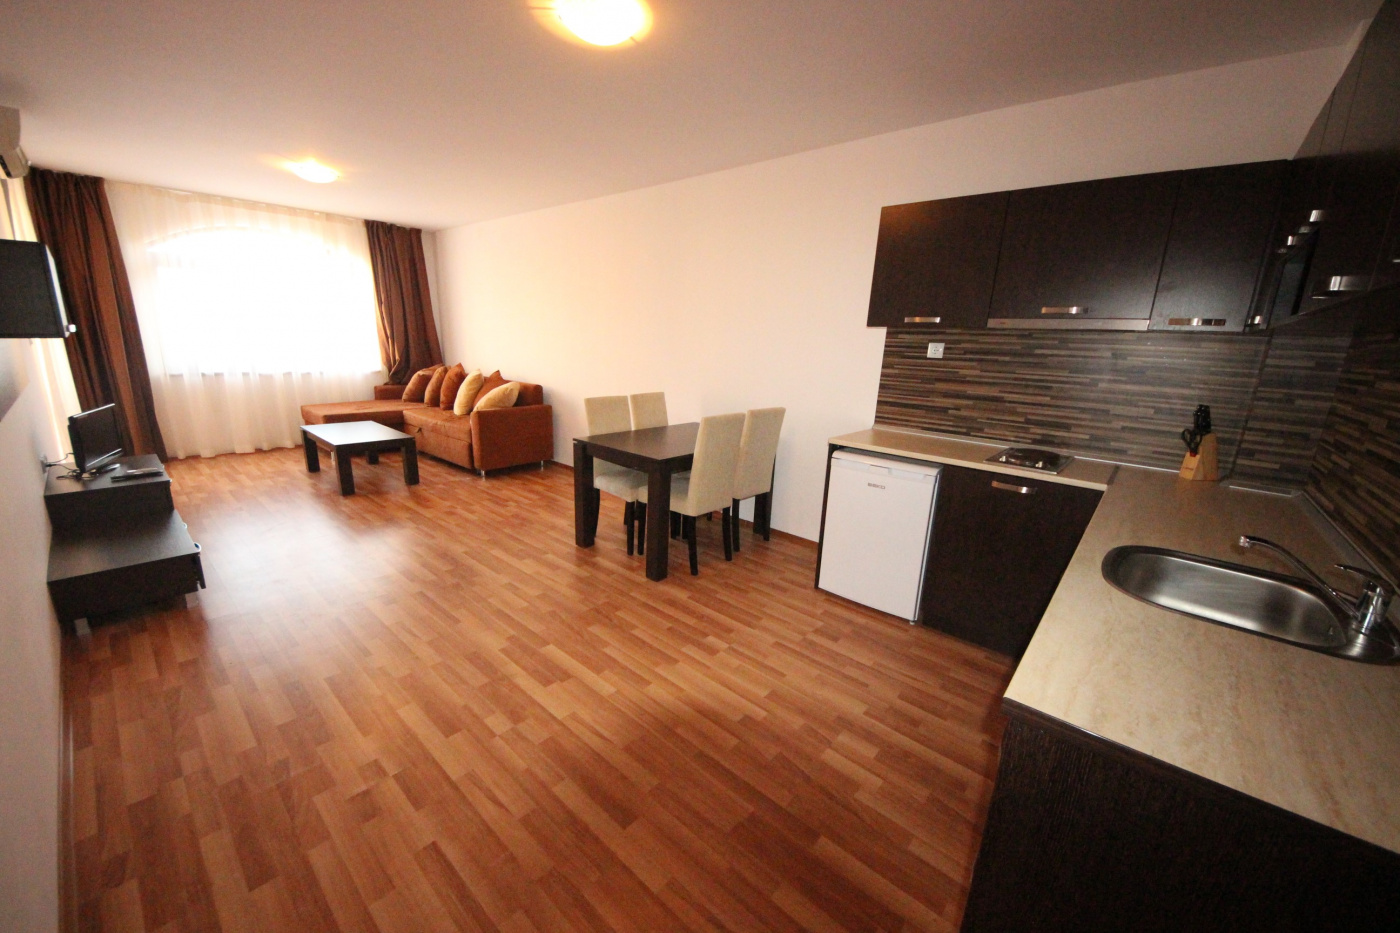  Apartment Residence Bratislava Obchodna 42 